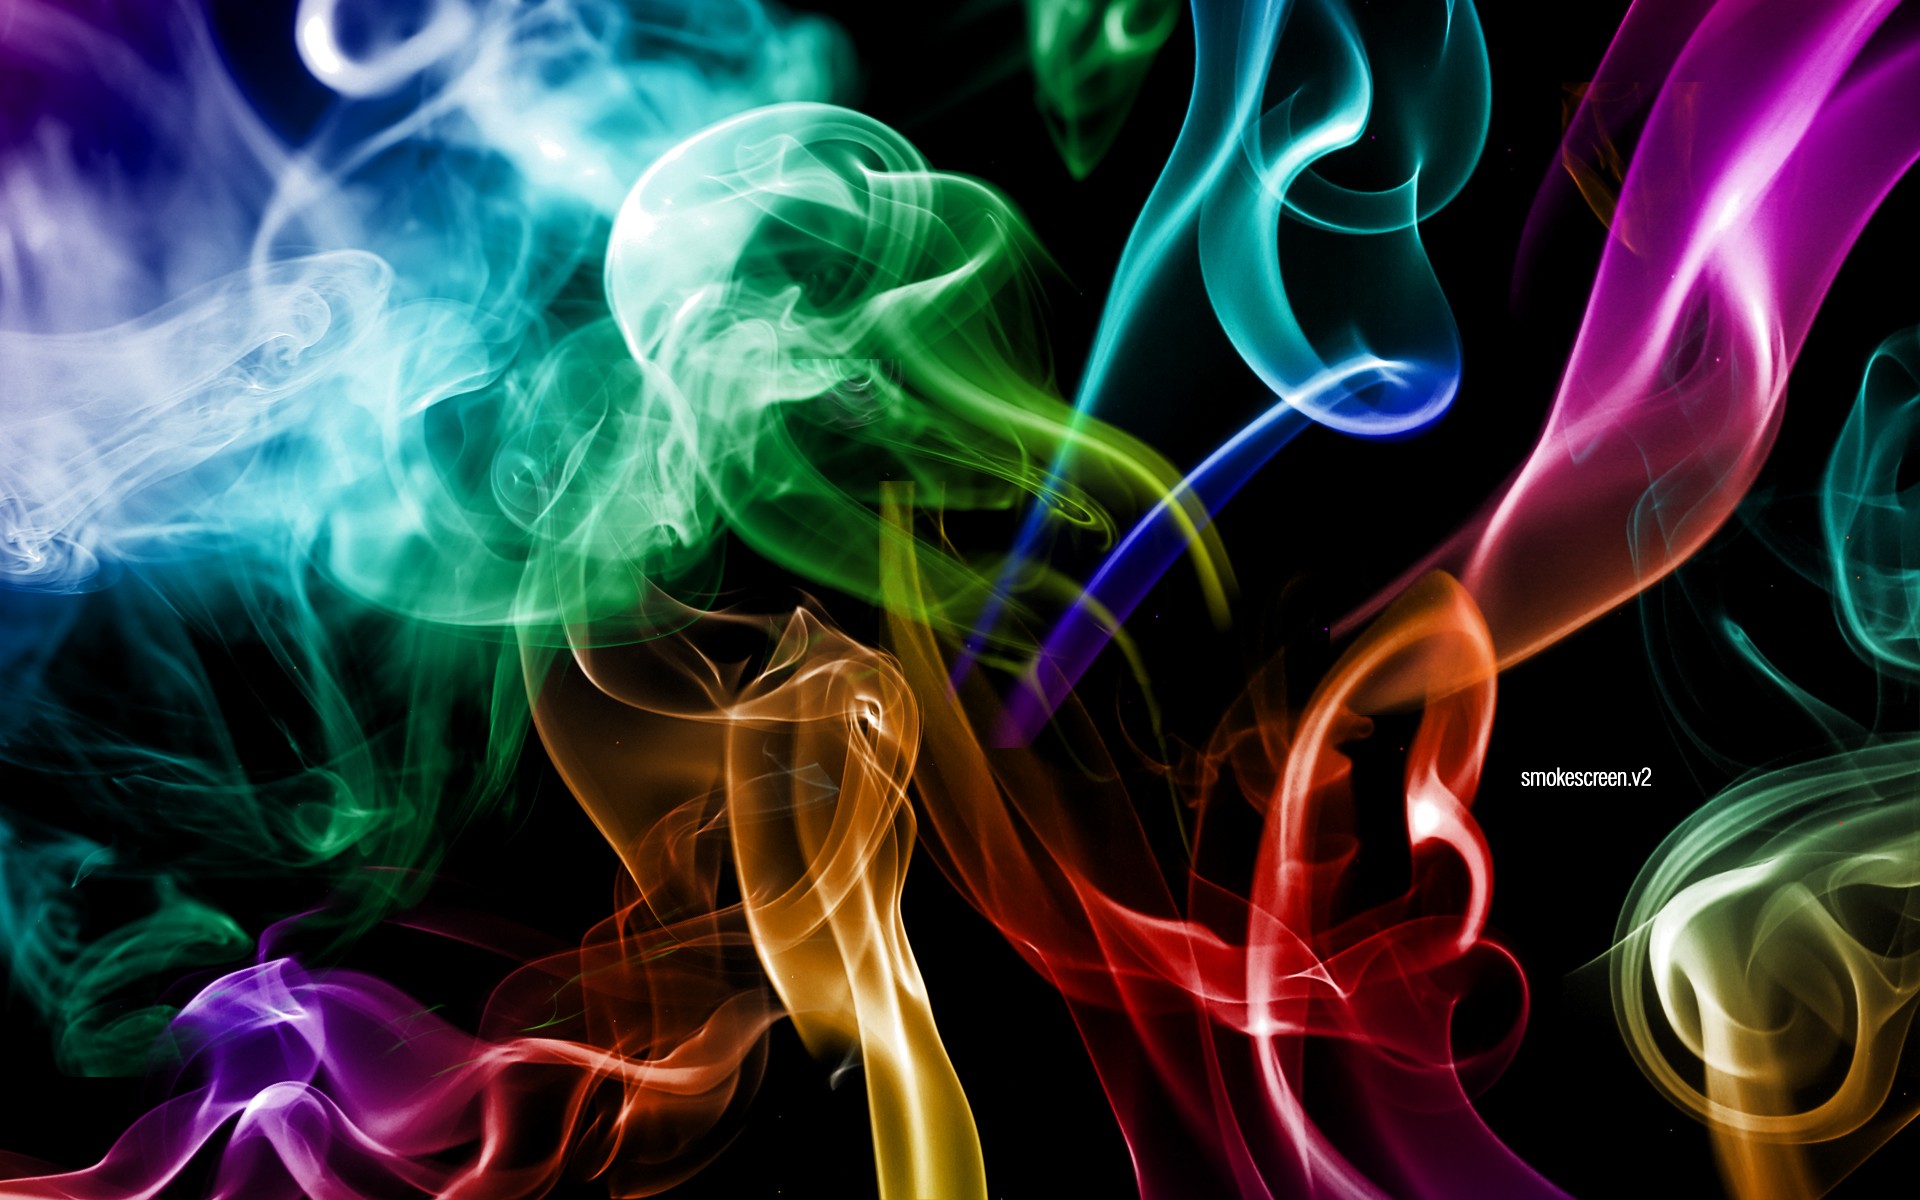 Color smoke iphone wallpaper, aesthetic | Free Photo - rawpixel